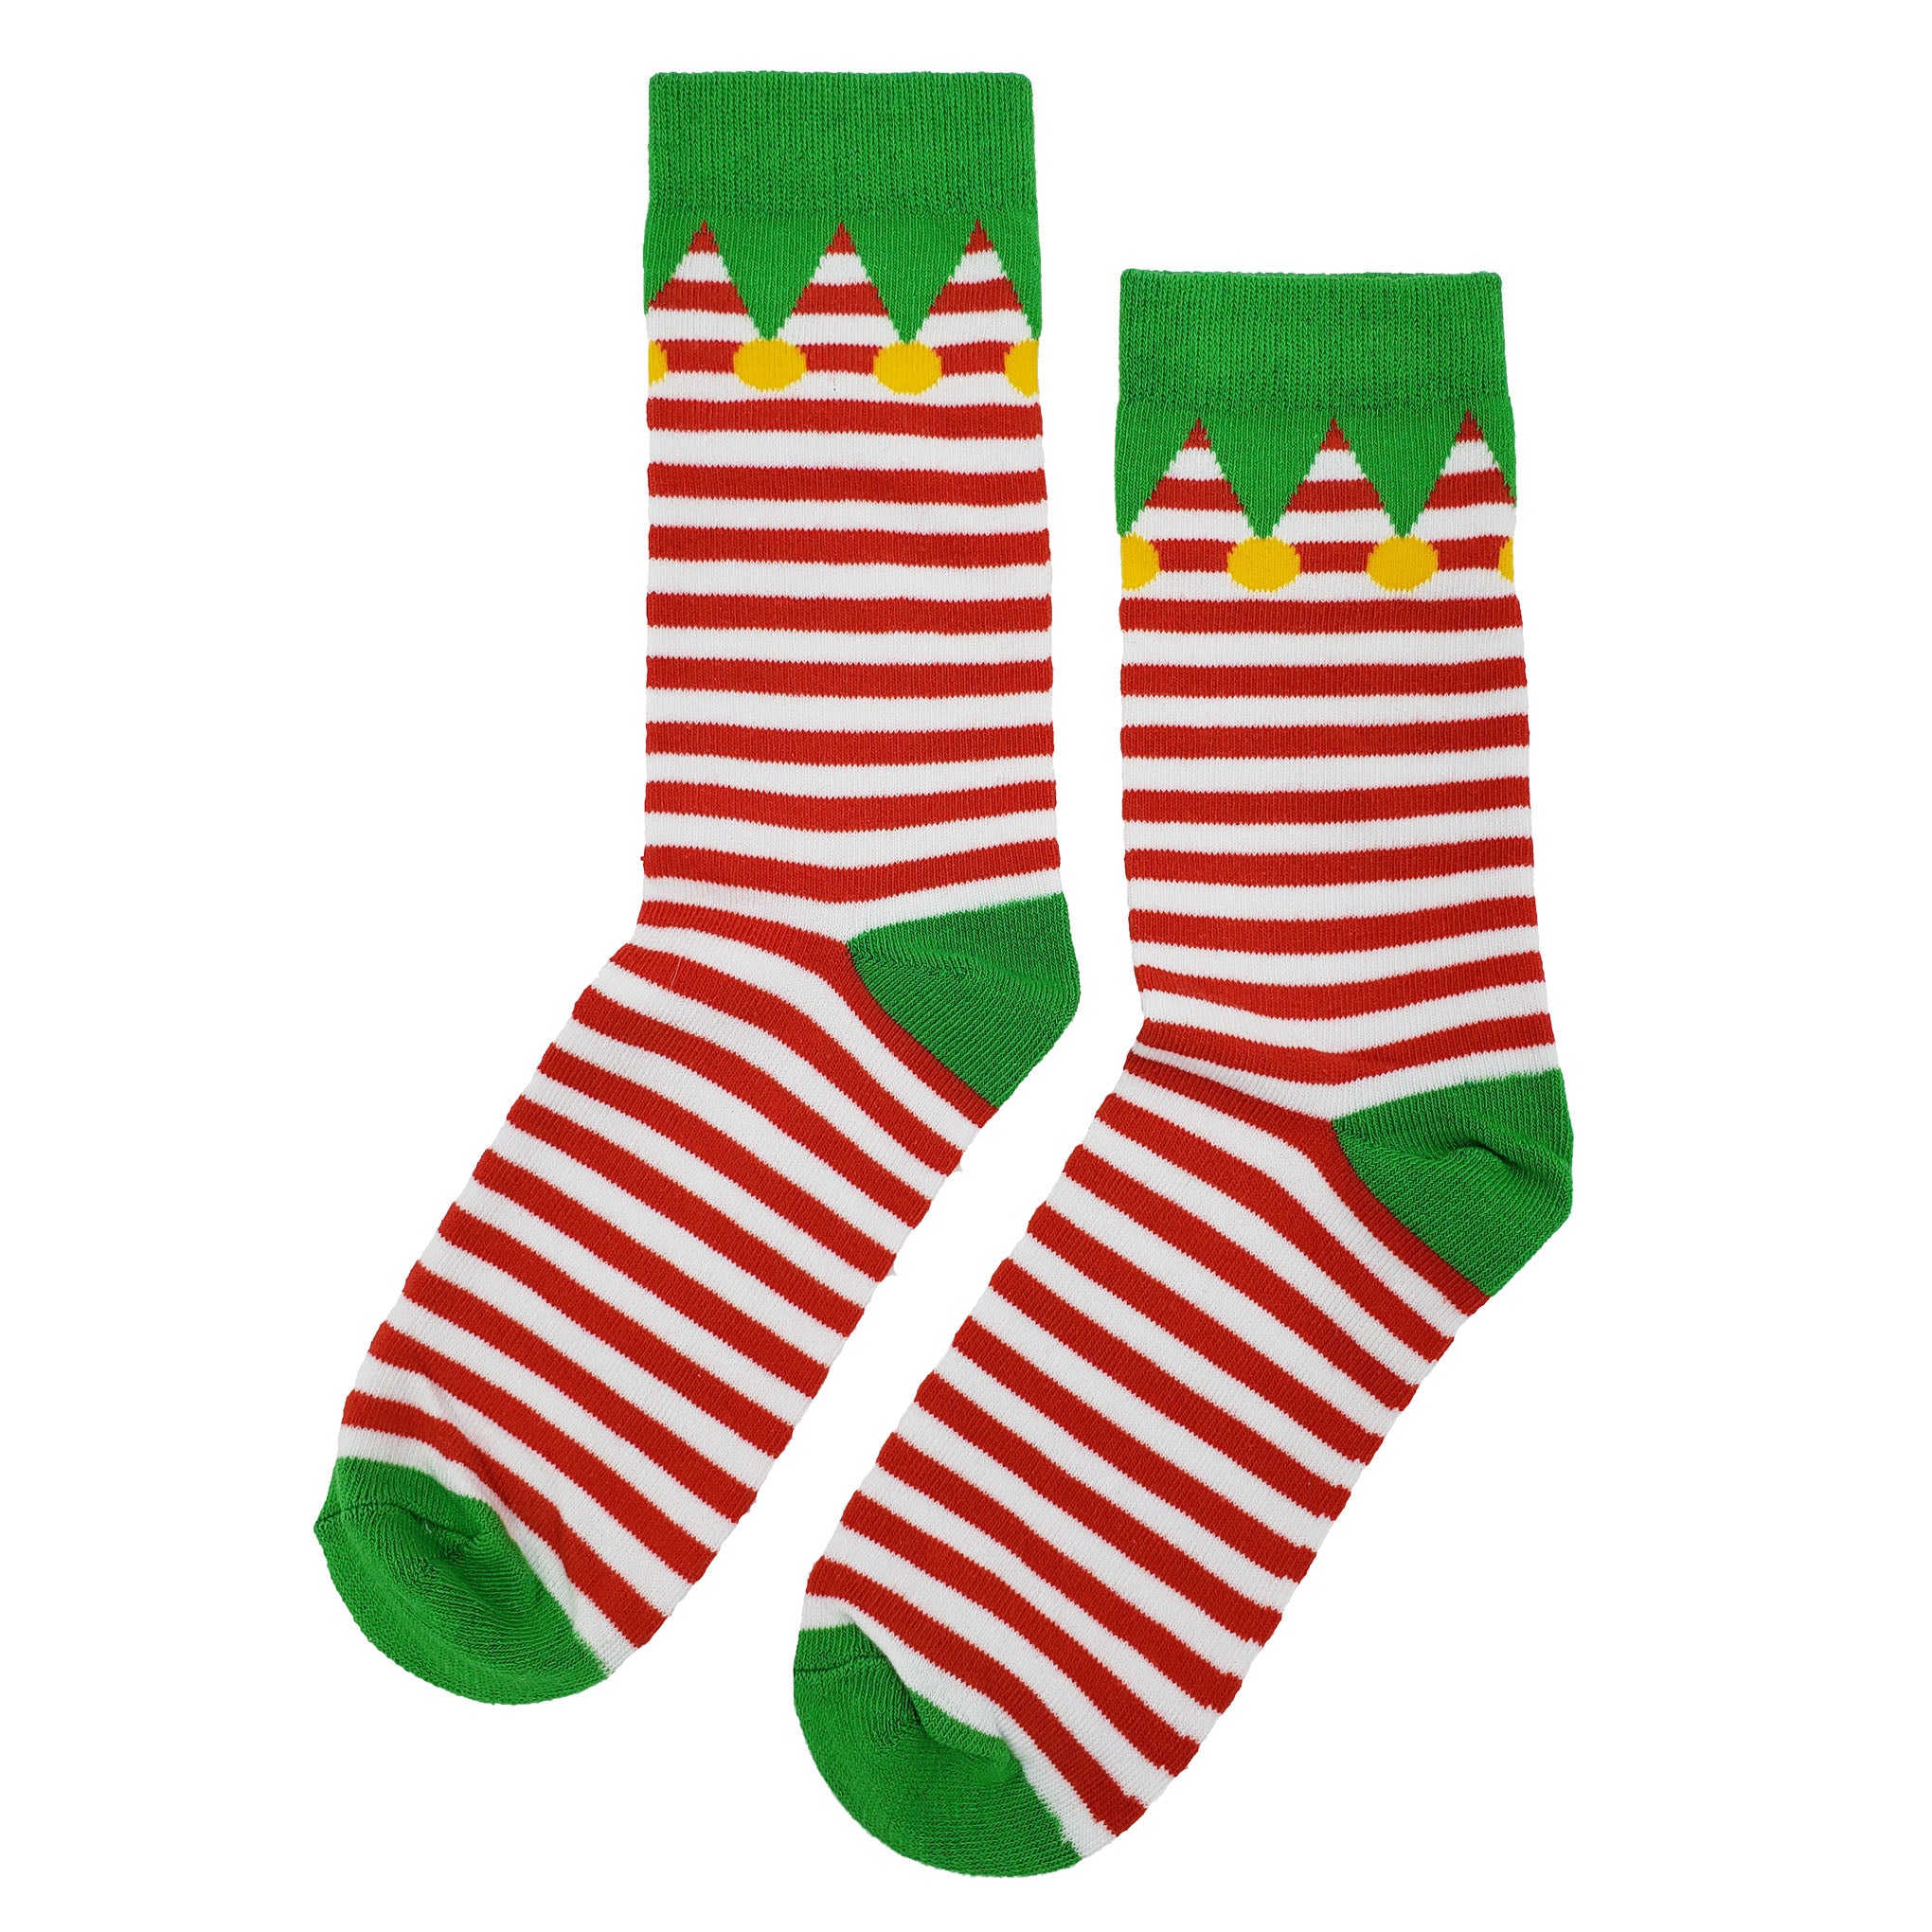 Christmas Elf Socks - Fun and Crazy Socks at Sockfly.com